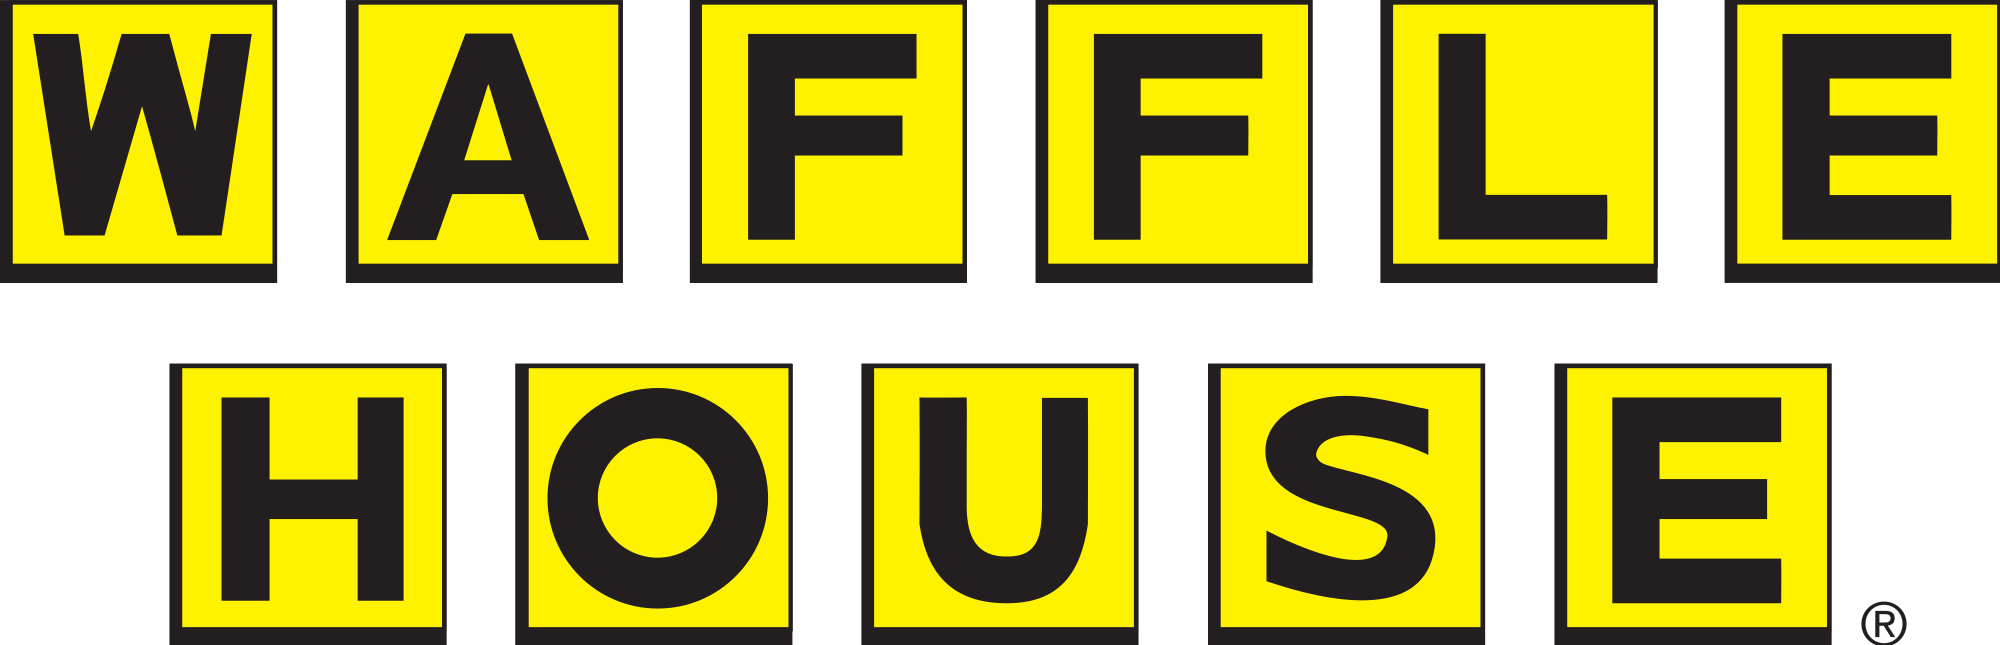 Waffle House (2000x645)